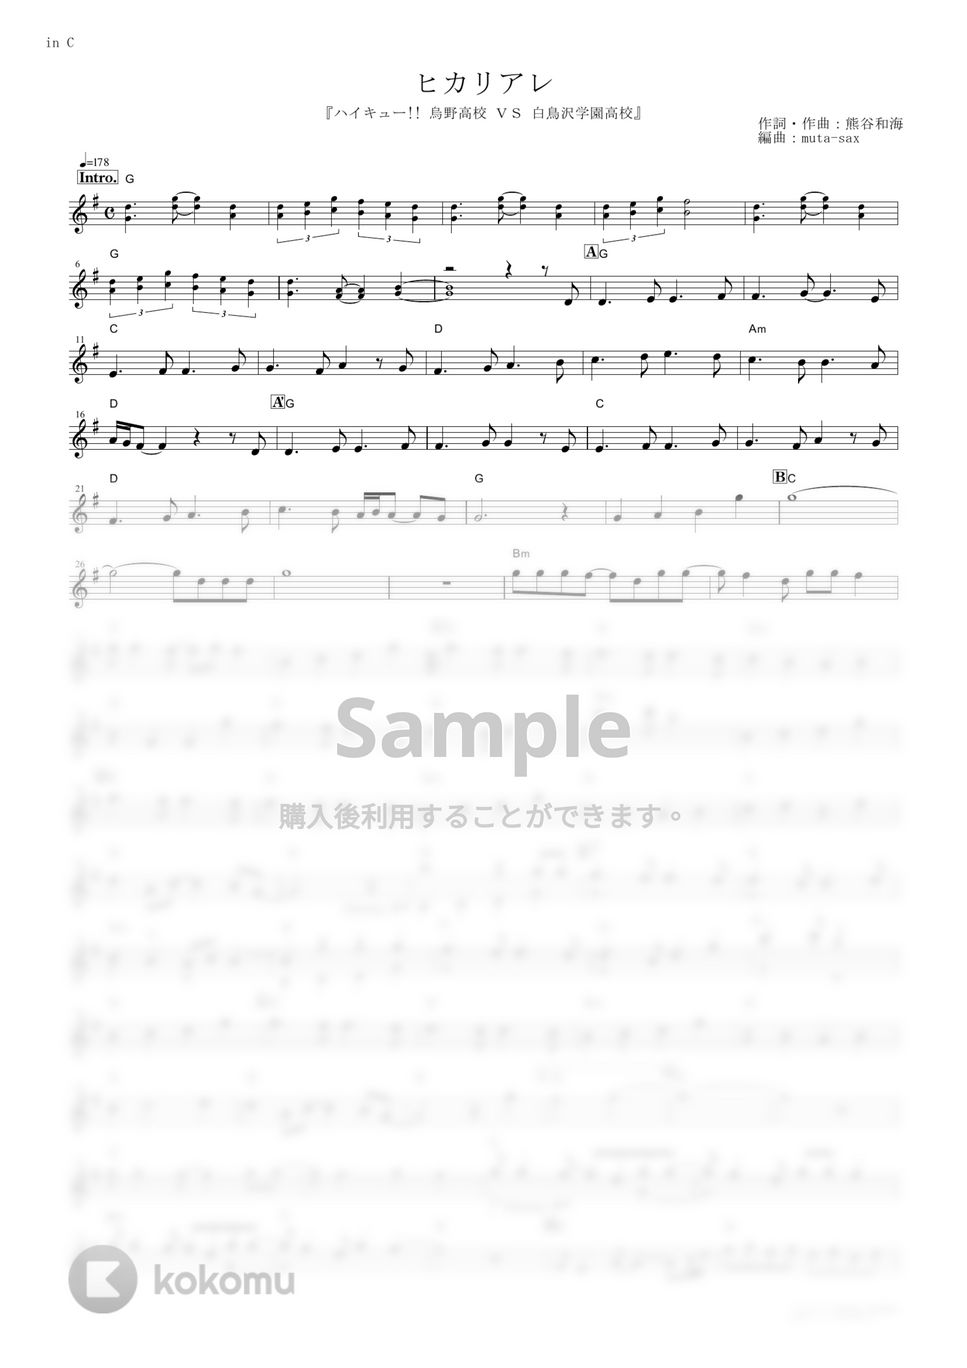 BURNOUT SYNDROMES - ヒカリアレ (『ハイキュー!! 烏野高校 ＶＳ 白鳥沢学園高校』 / in C) by muta-sax